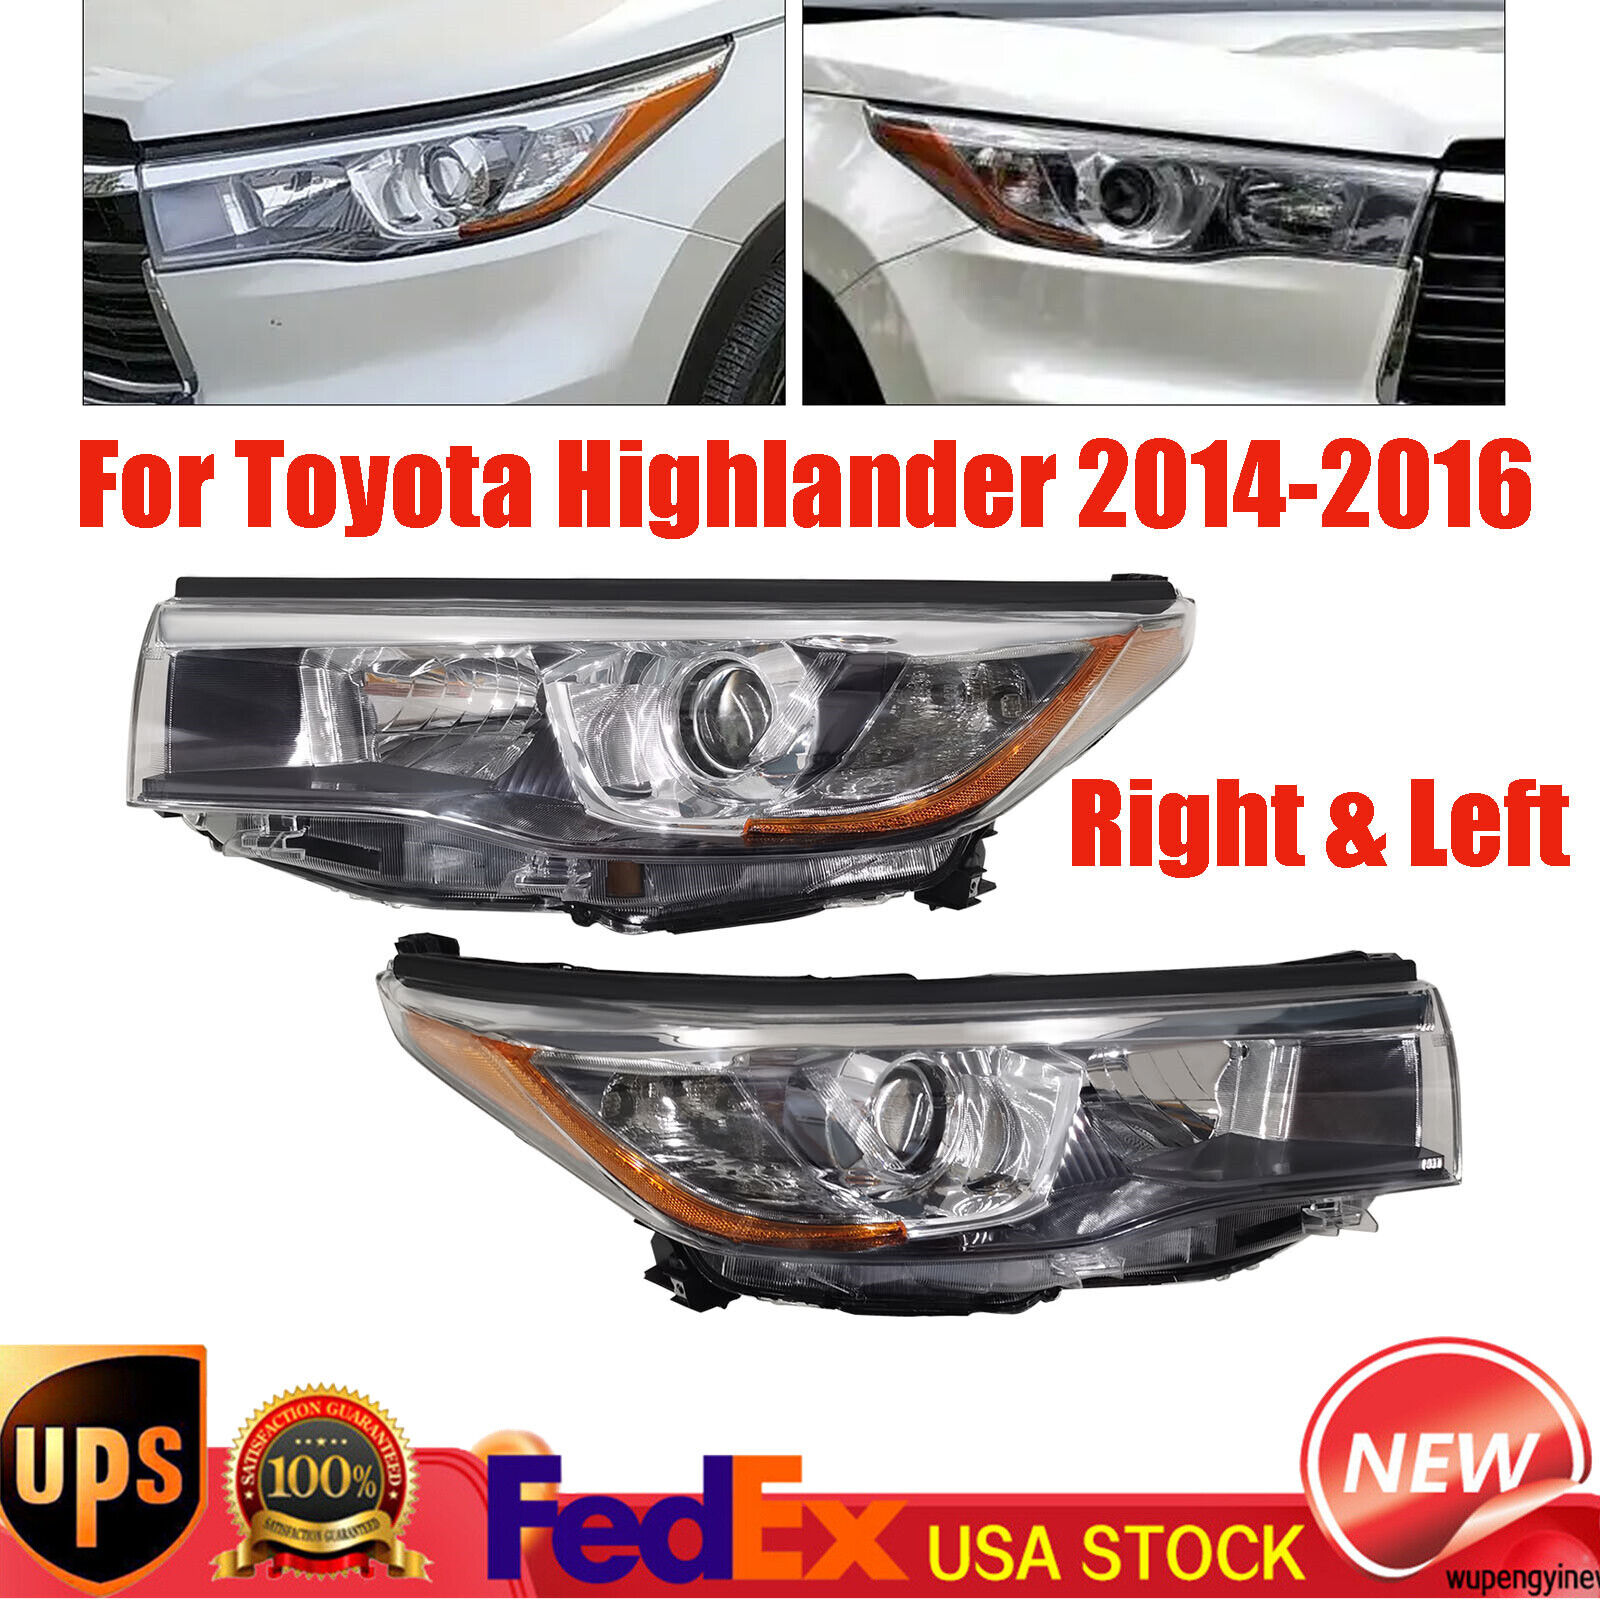 1 Pair For 2014-2016 Toyota Highlander Headlights Headlamps Right & Left Side